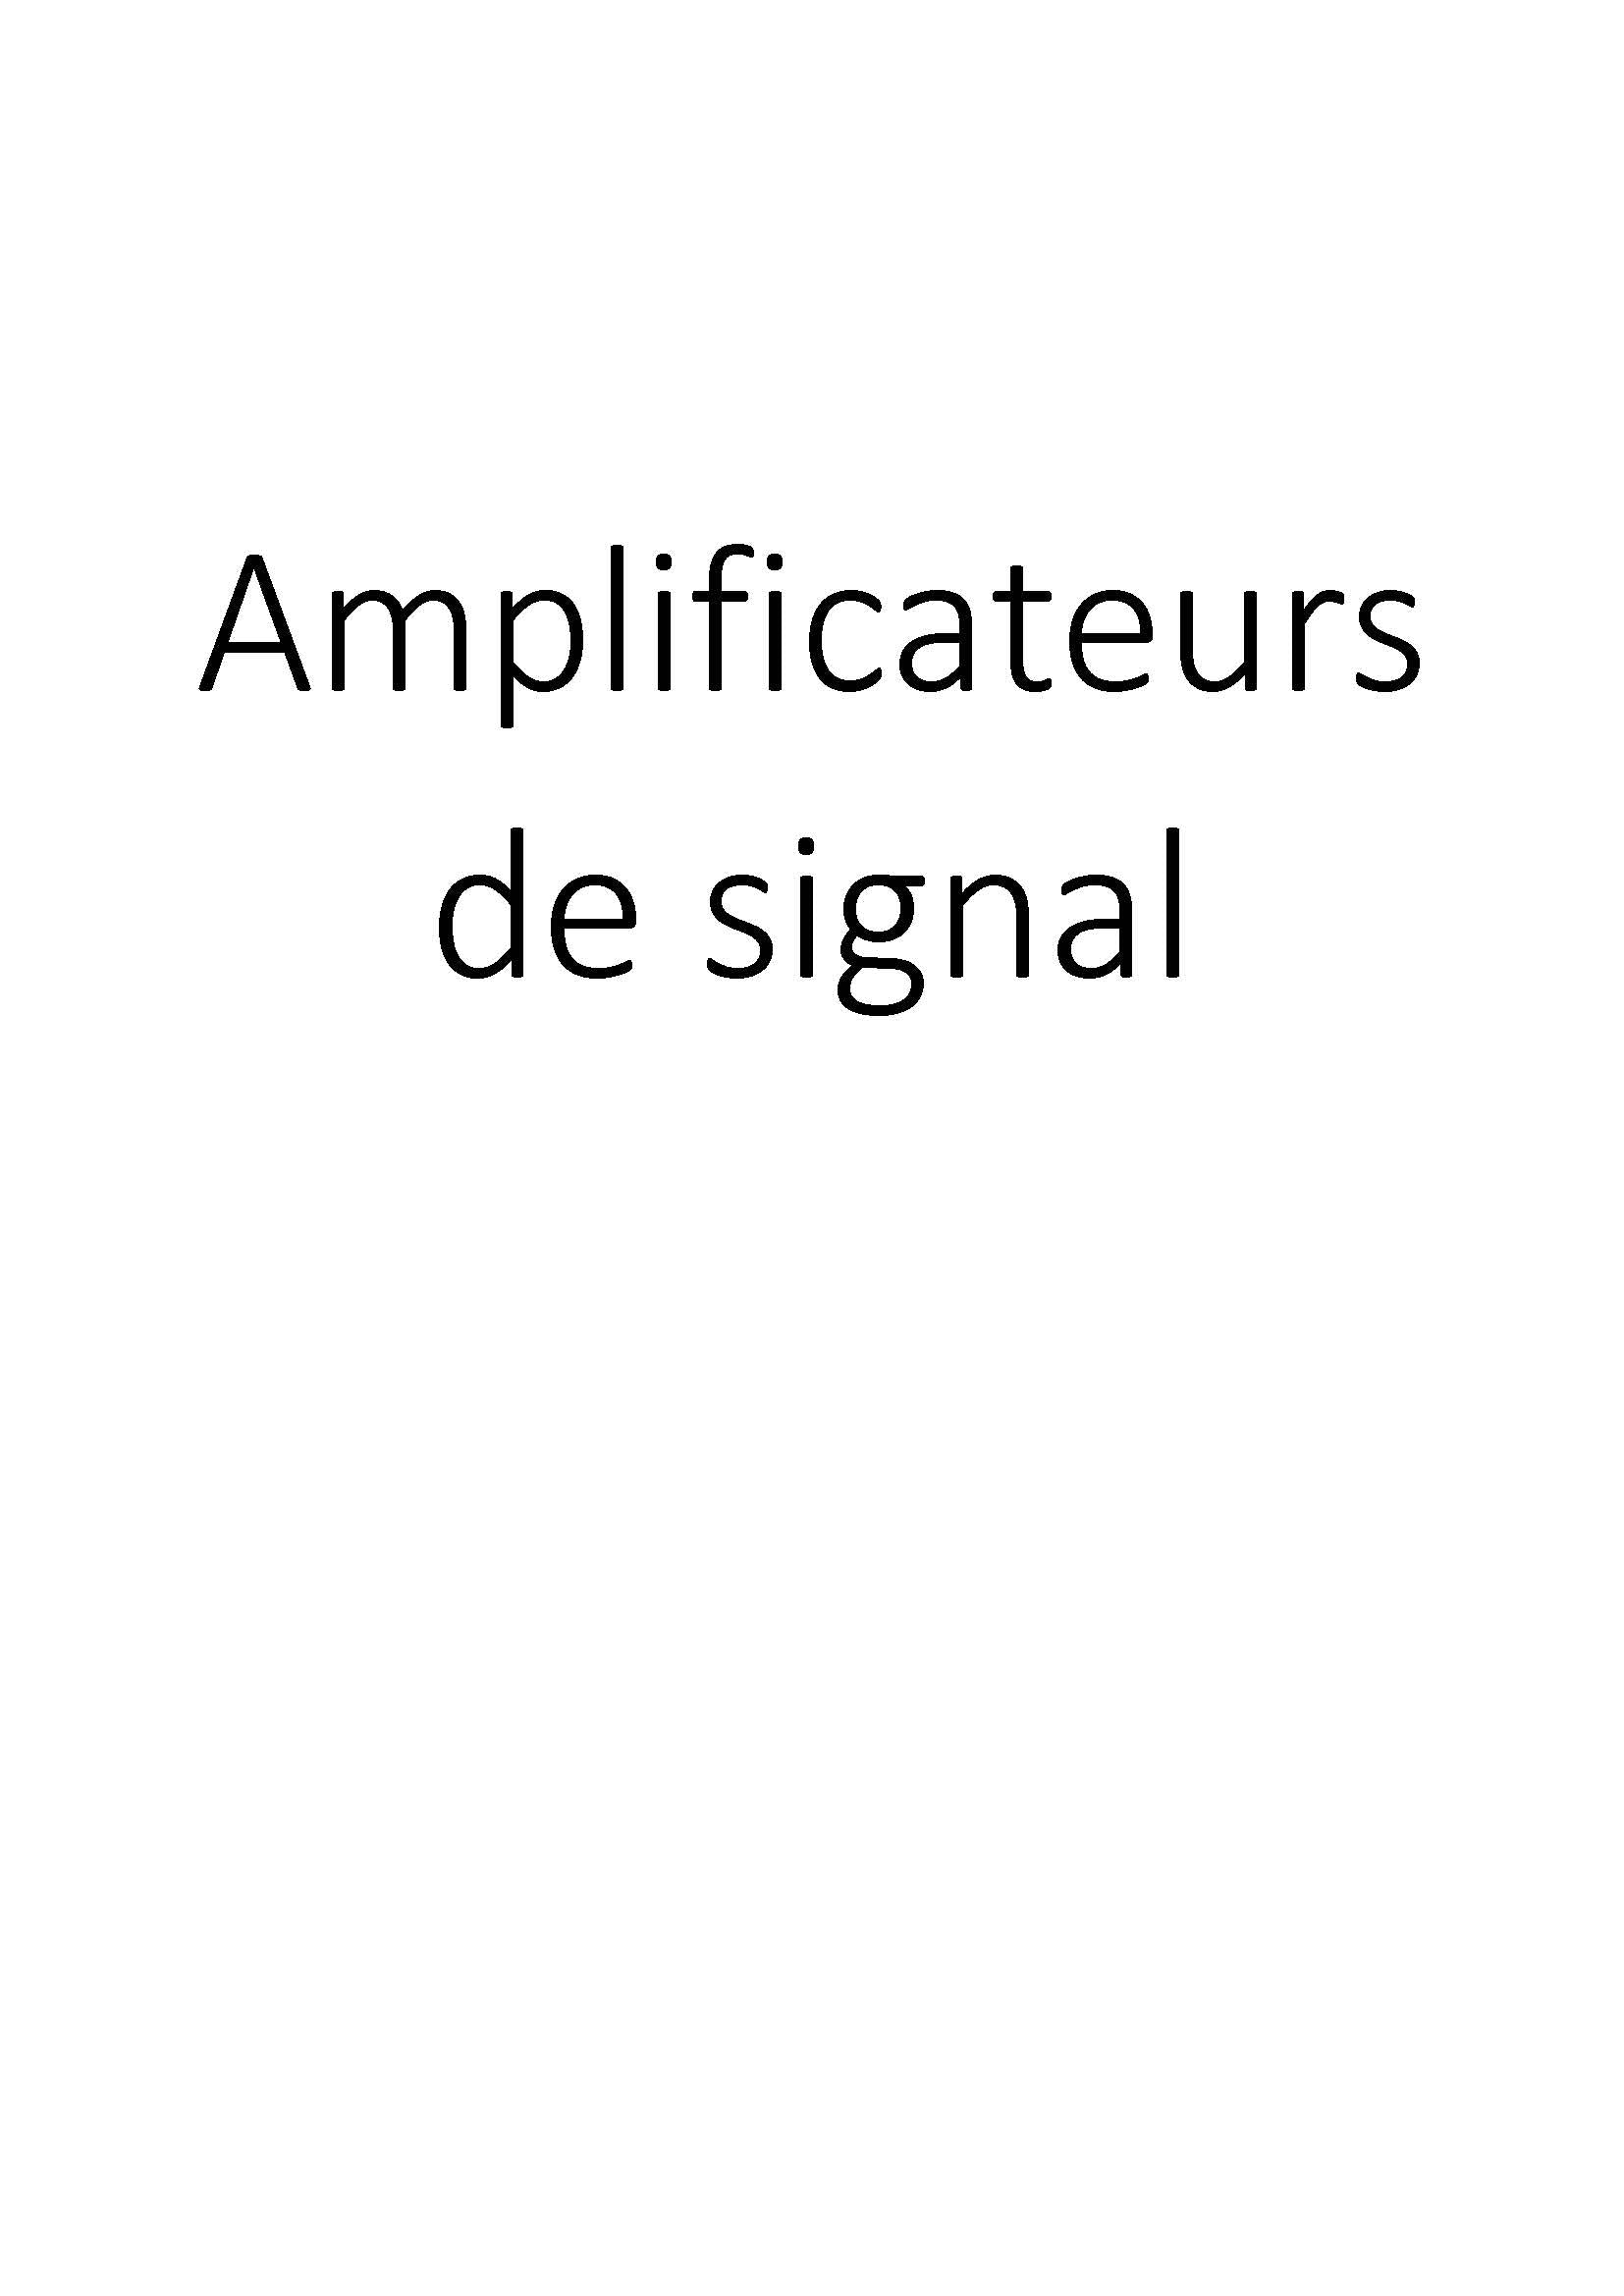 Amplificateurs de signal clicktofournisseur.com